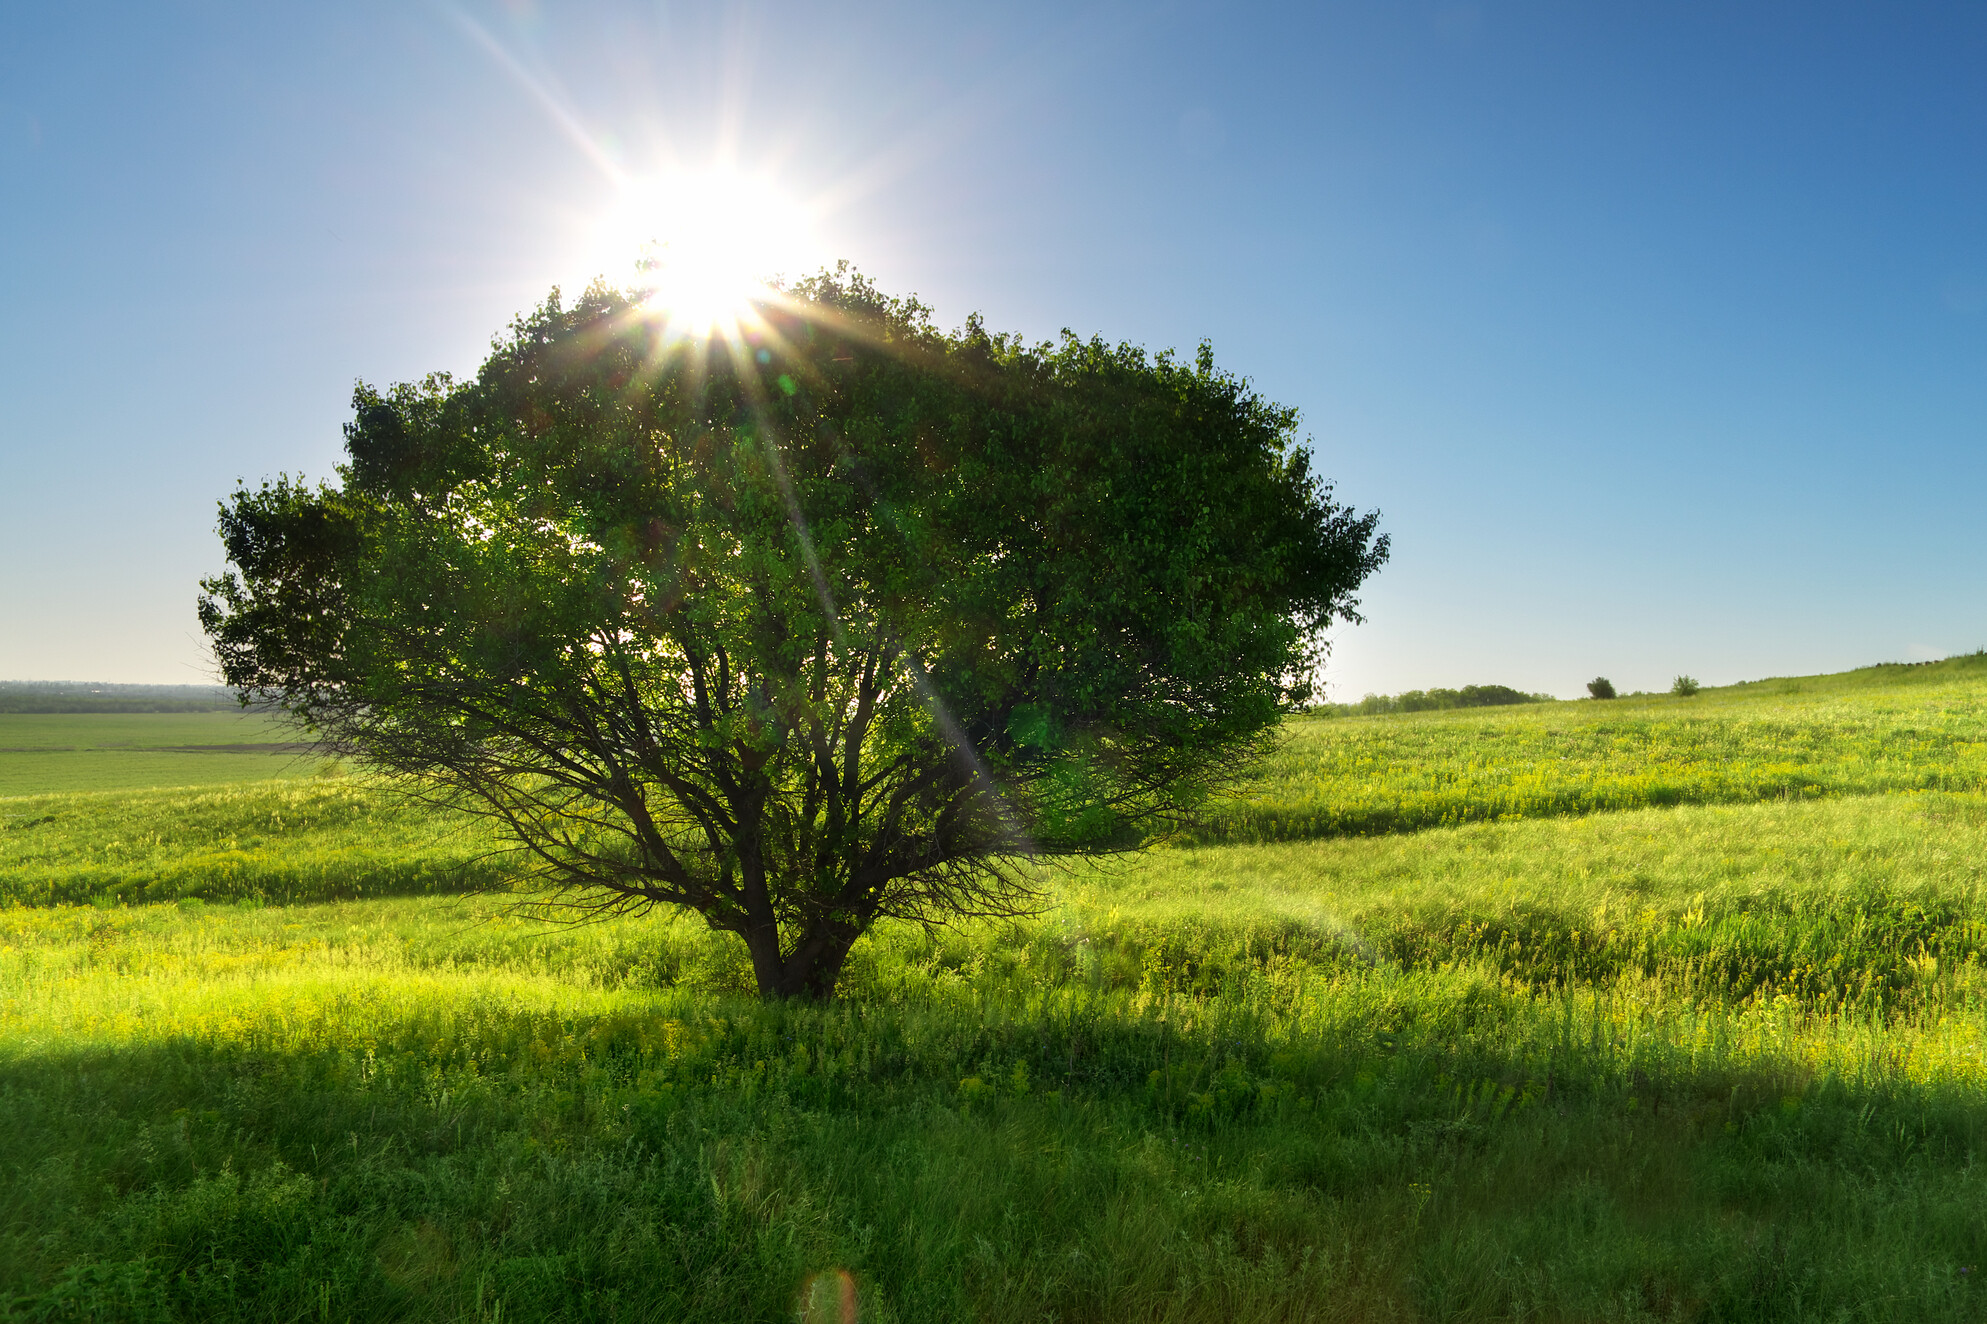 Tree in Grassy Field On Sunny Day